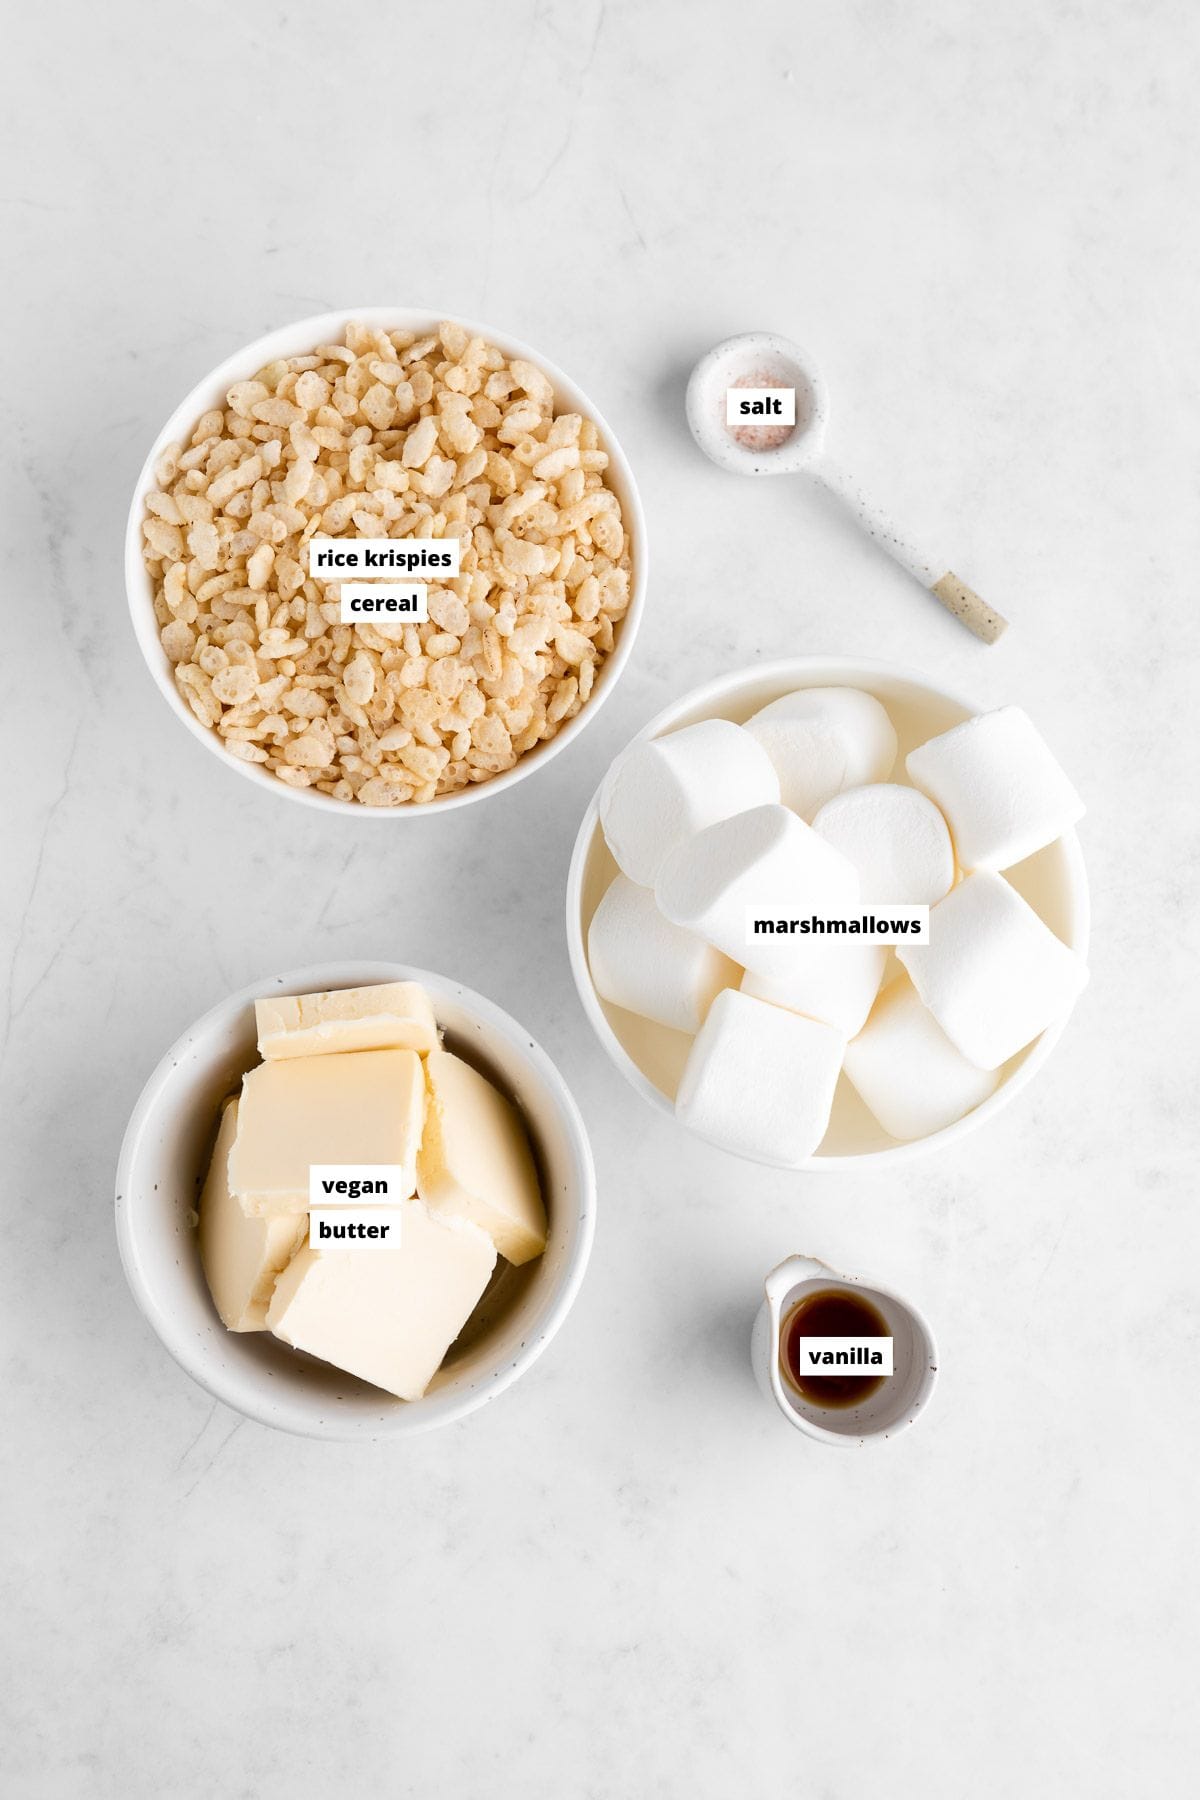 bowls of ingredients for homemade vegan rice krispie treats